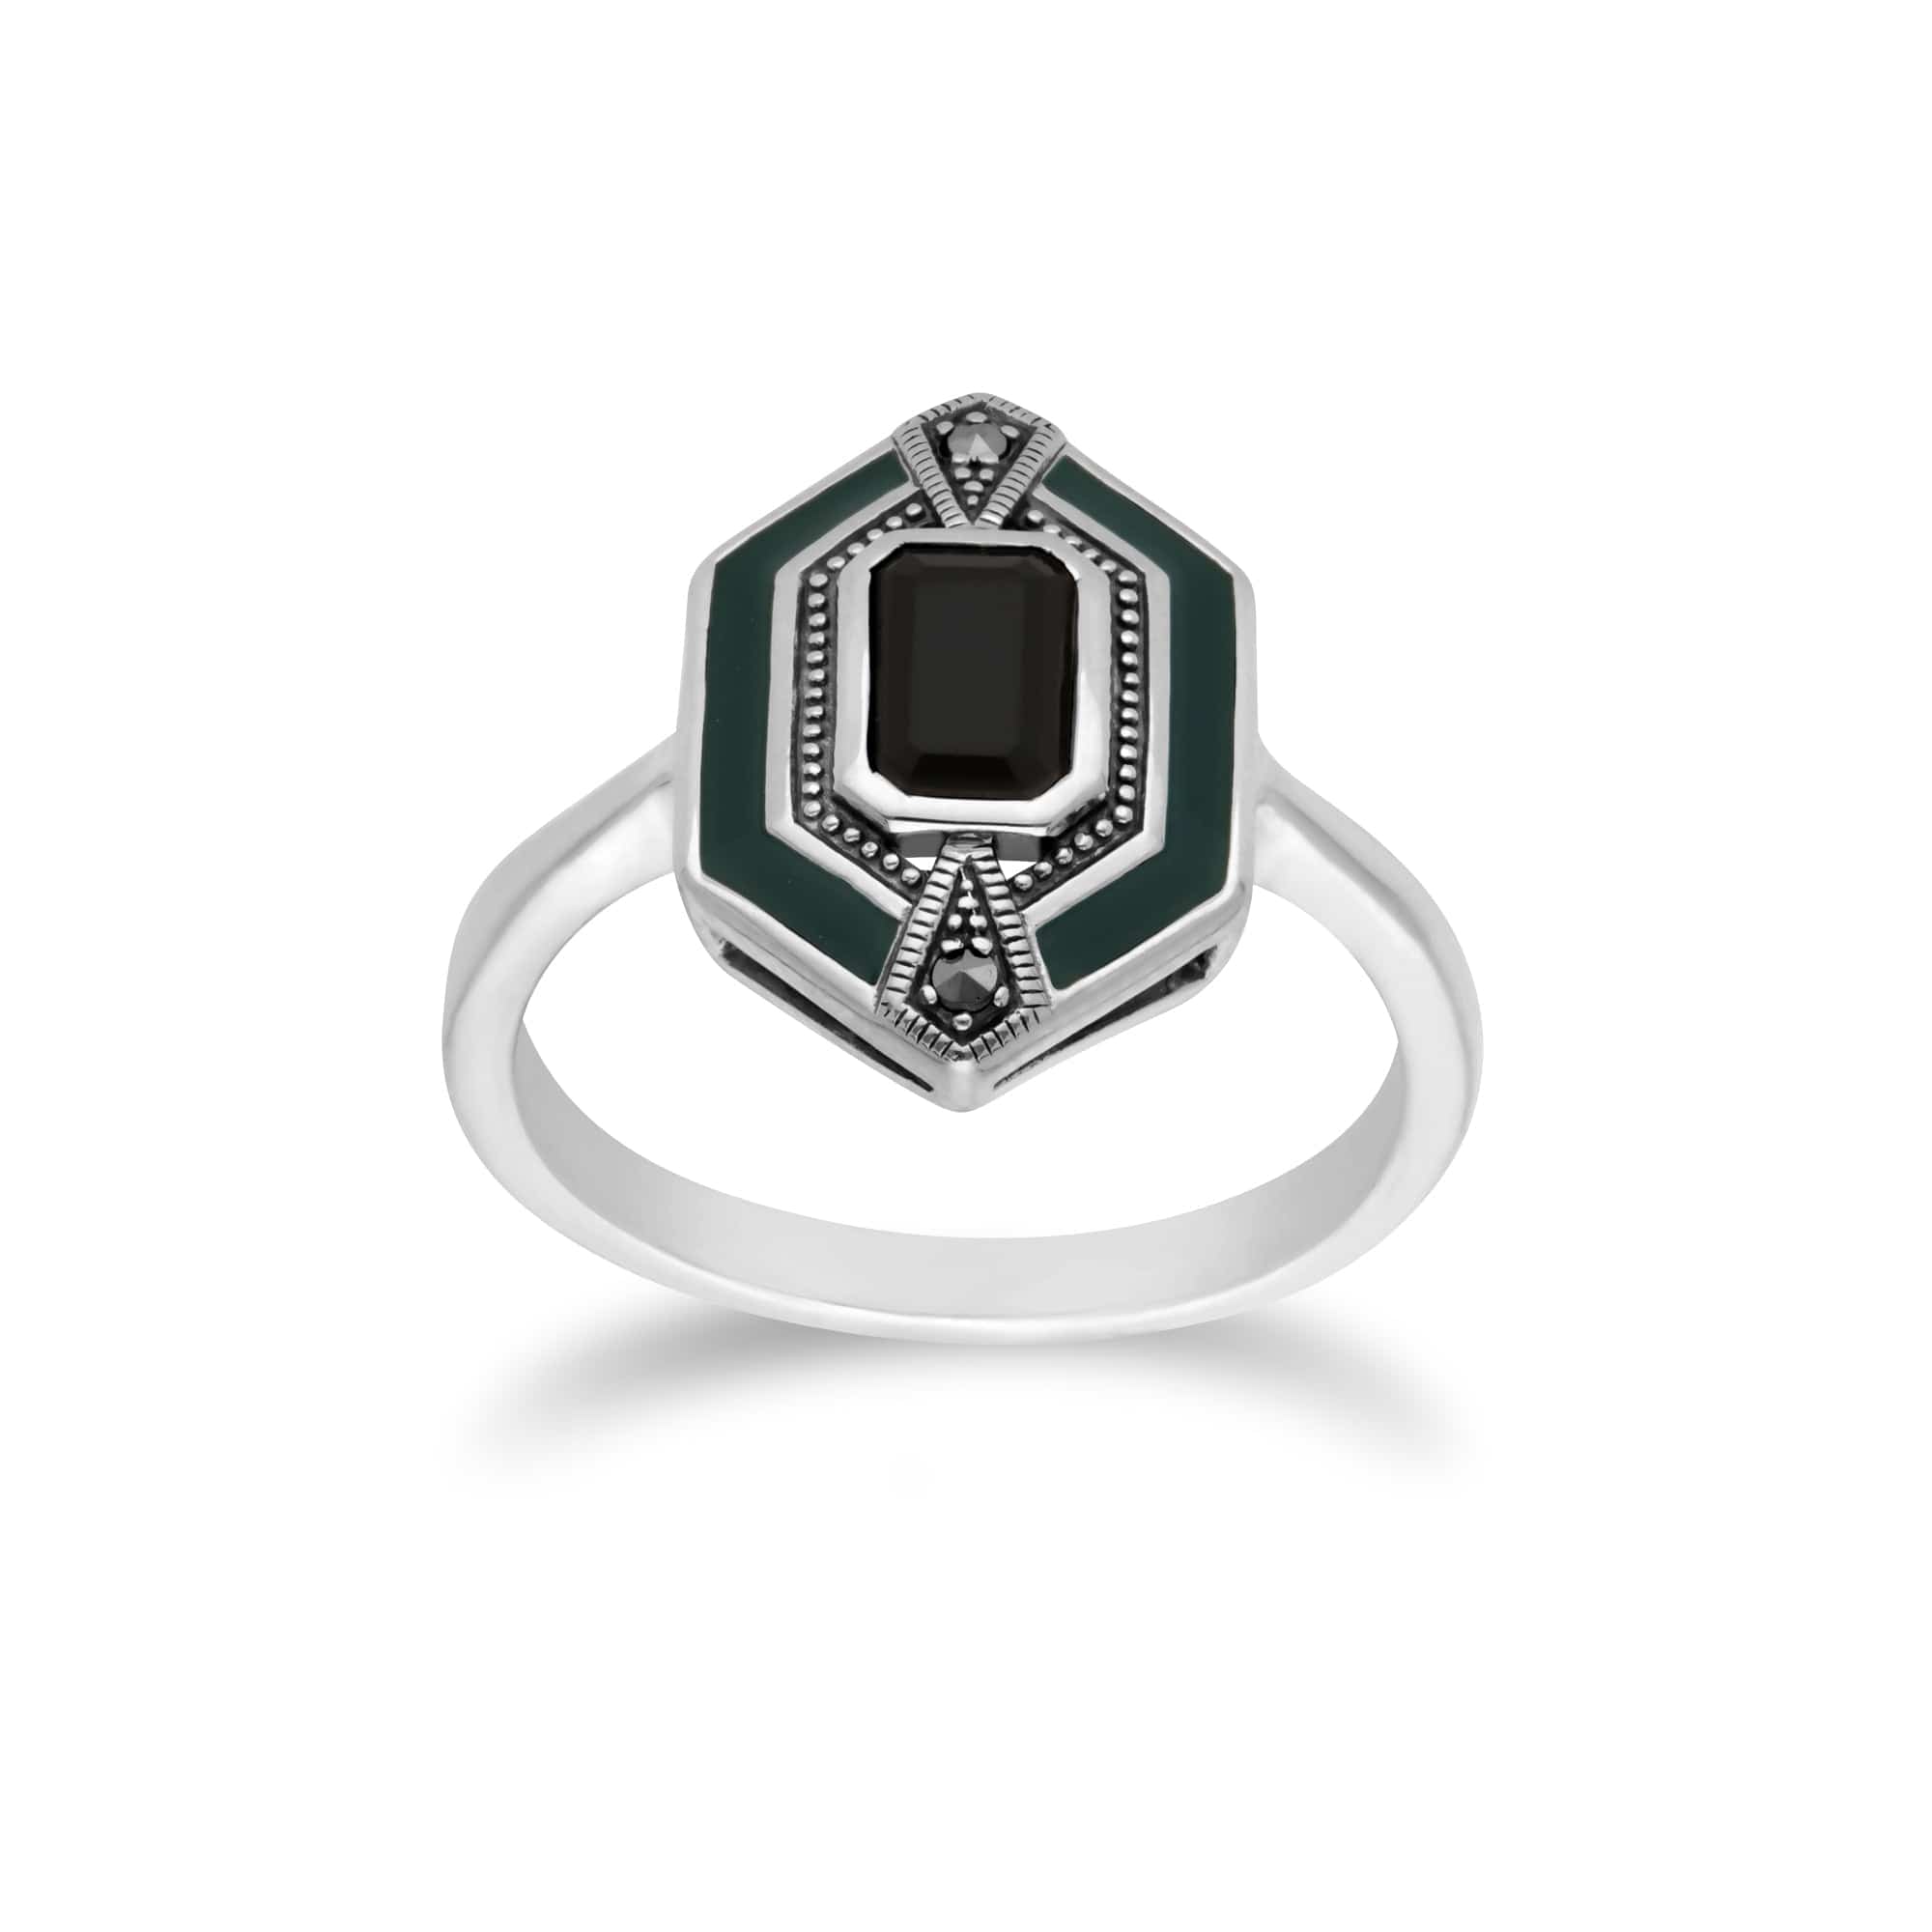 214L164504925-214R602604925 Art Deco Style Black Onyx, Marcasite & Green Enamel Hexagon Ring & Bracelet Set in 925 Sterling Silver 3